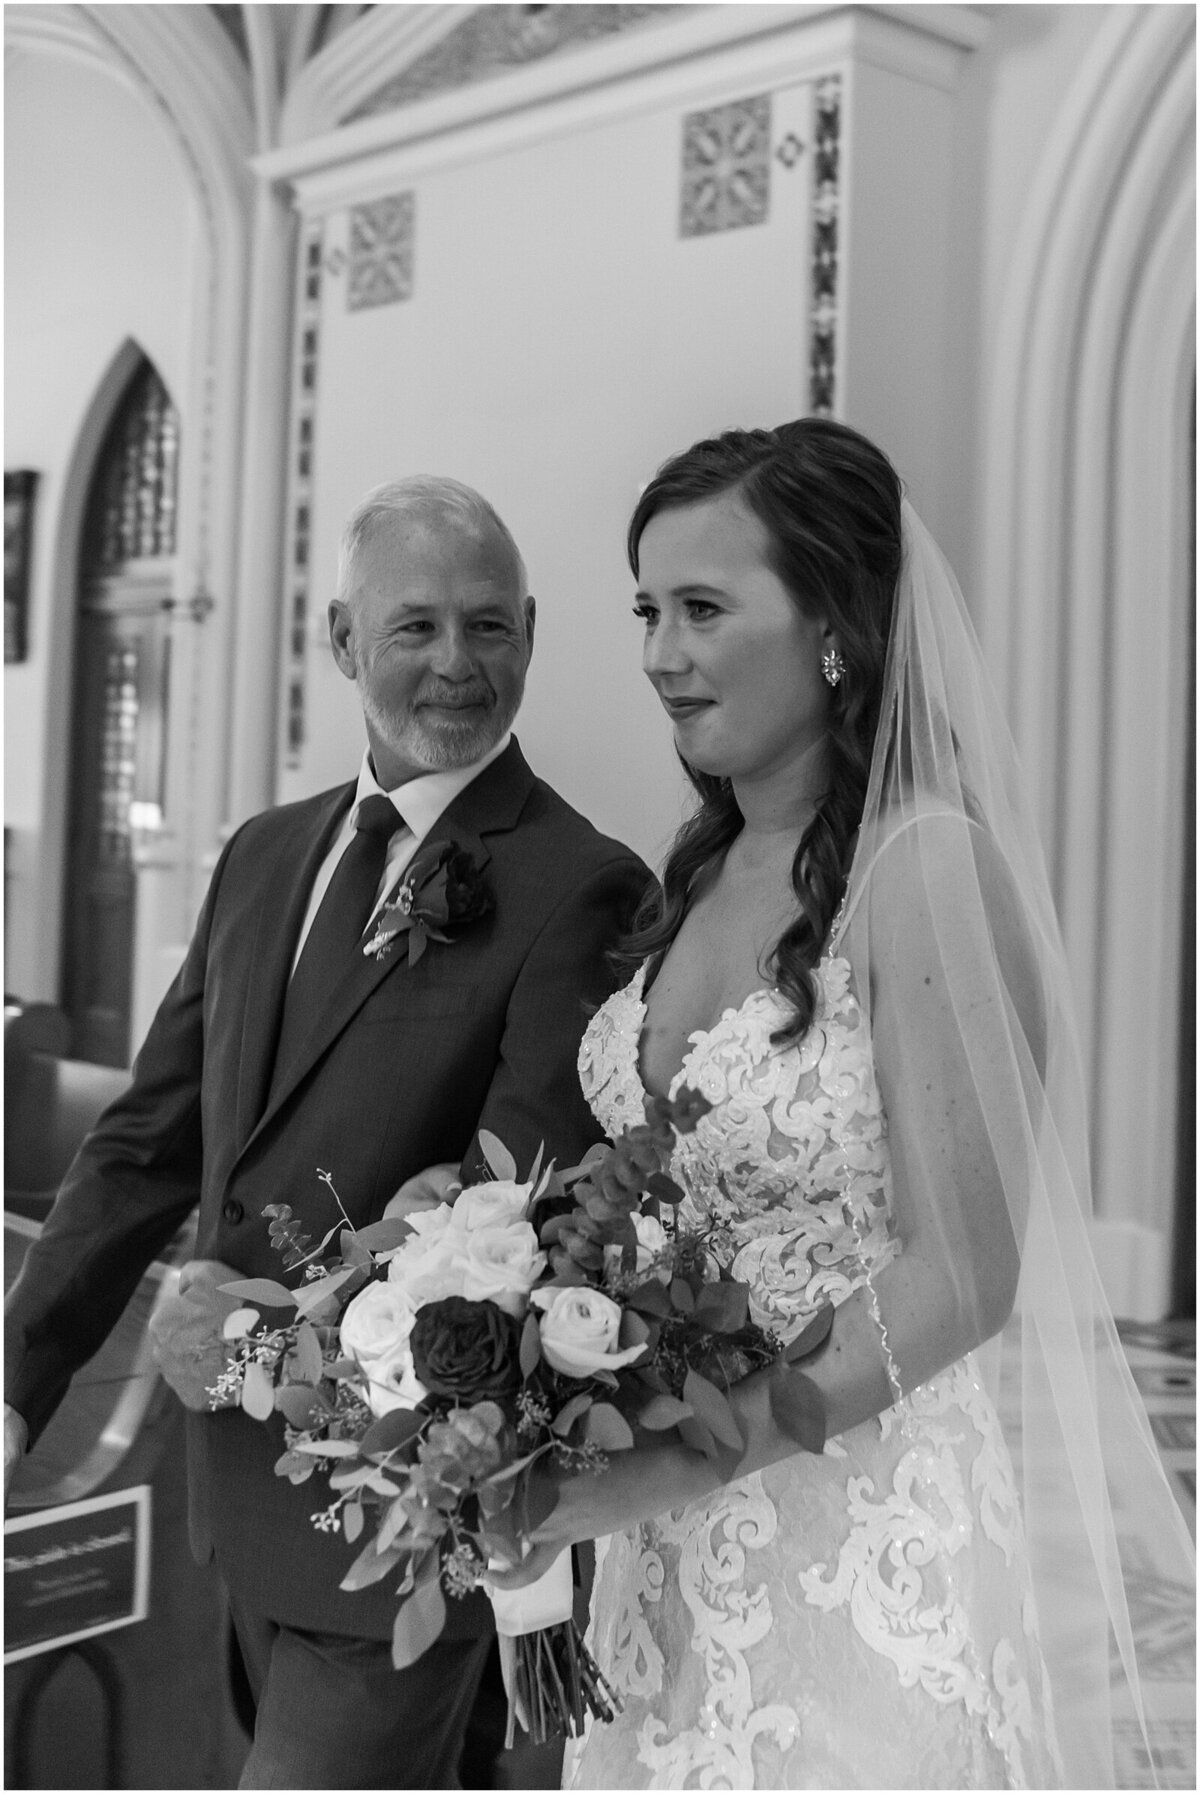 Melissa & Arturo Photography | The Veranda Wedding - Alyssa & Albert - Ceremony 046